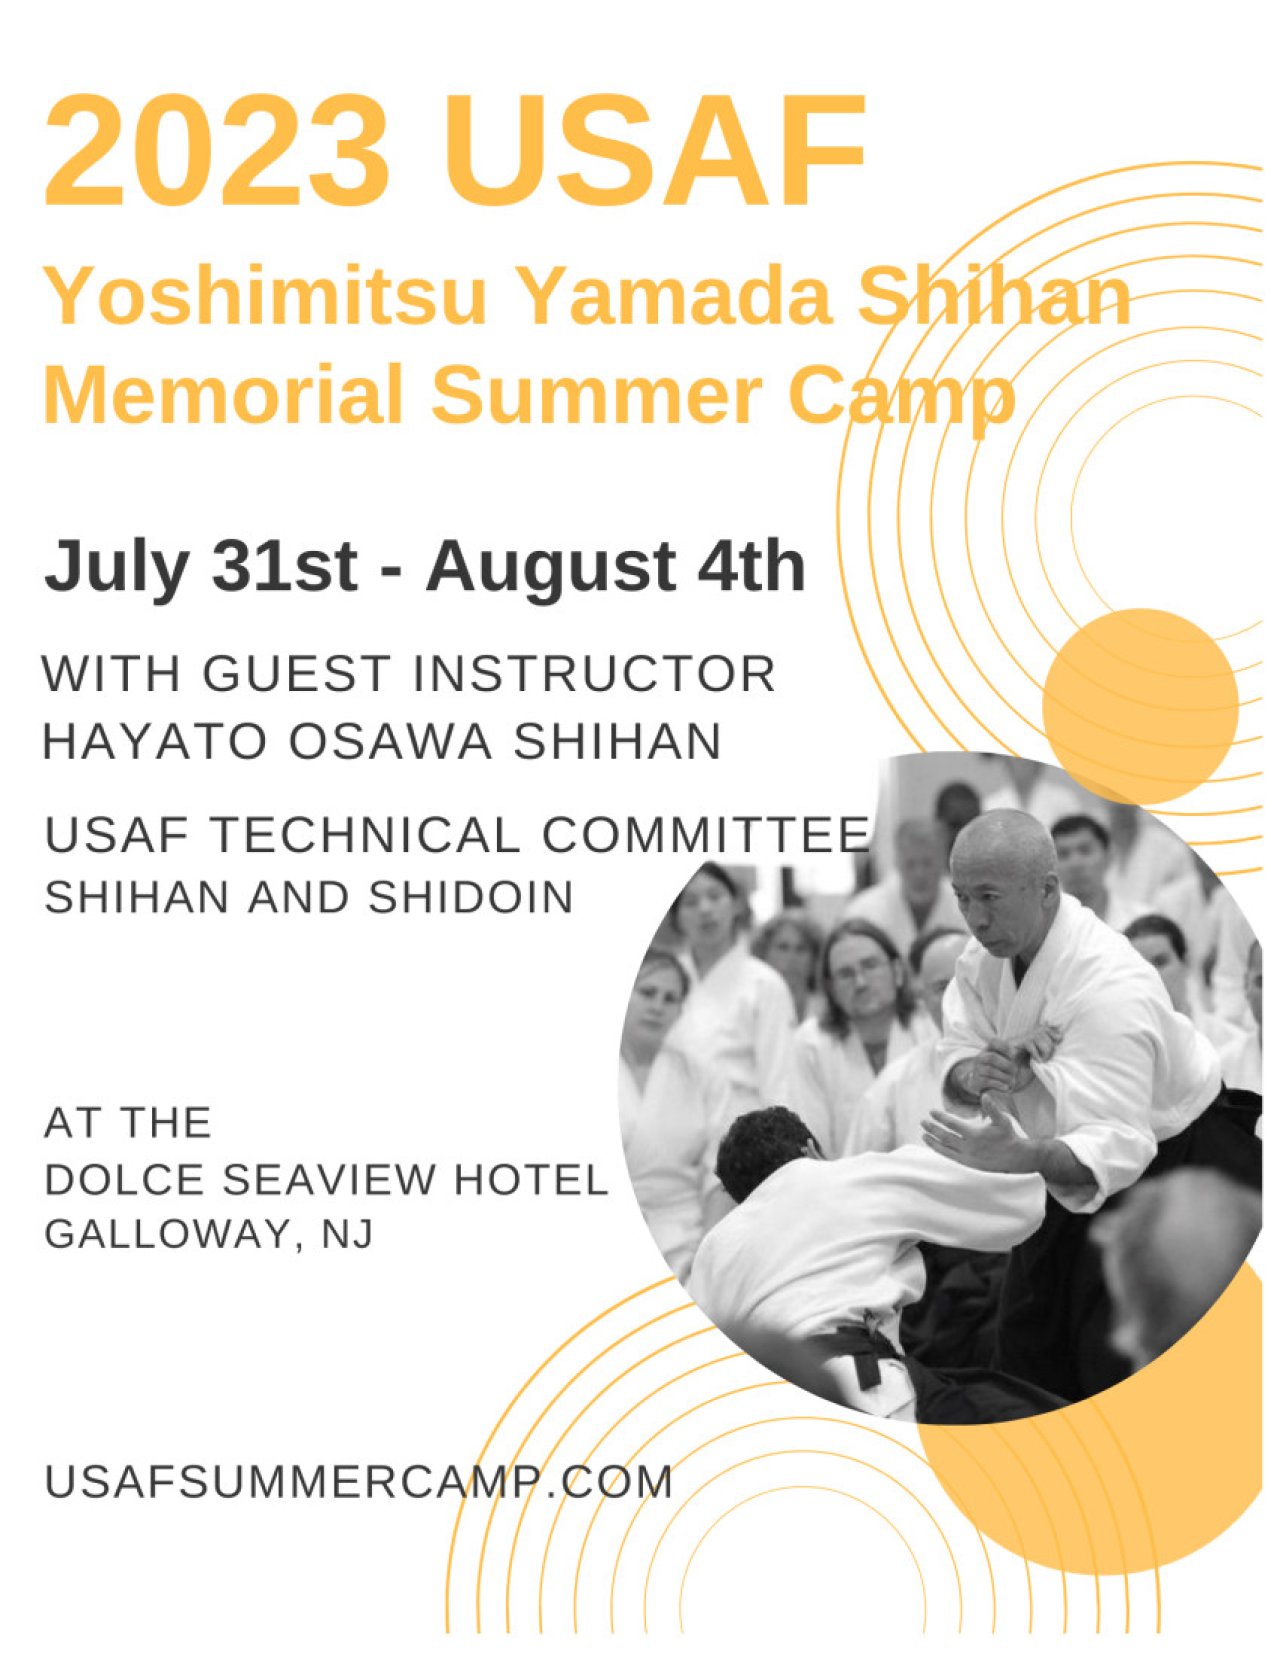 2023 USAF YOSHIMITSU YAMADA SHIHAN MEMORIAL SUMMER CAMP AikidoTravel